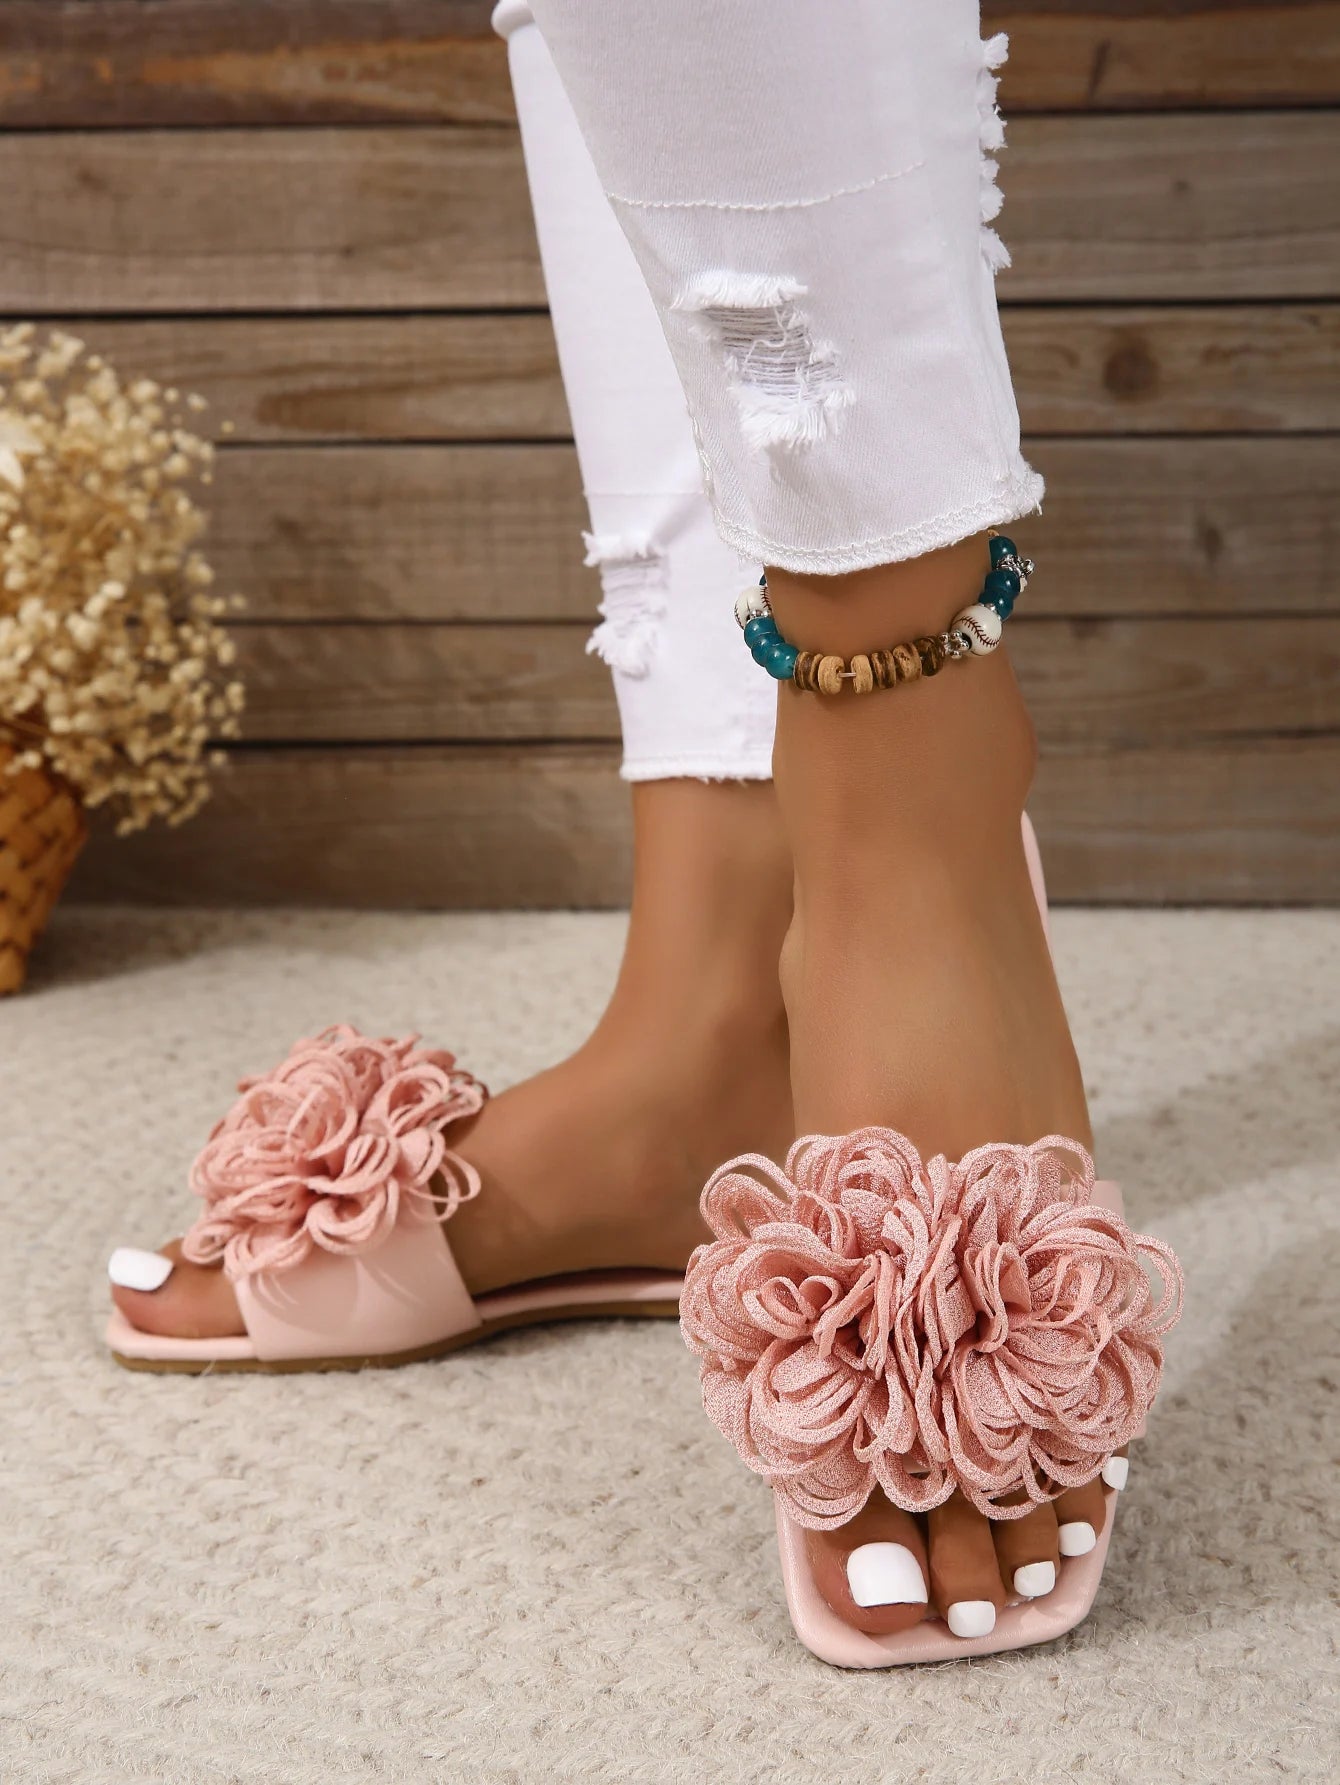 Pink Flower Design Super Comfort Flat Slipper For Women